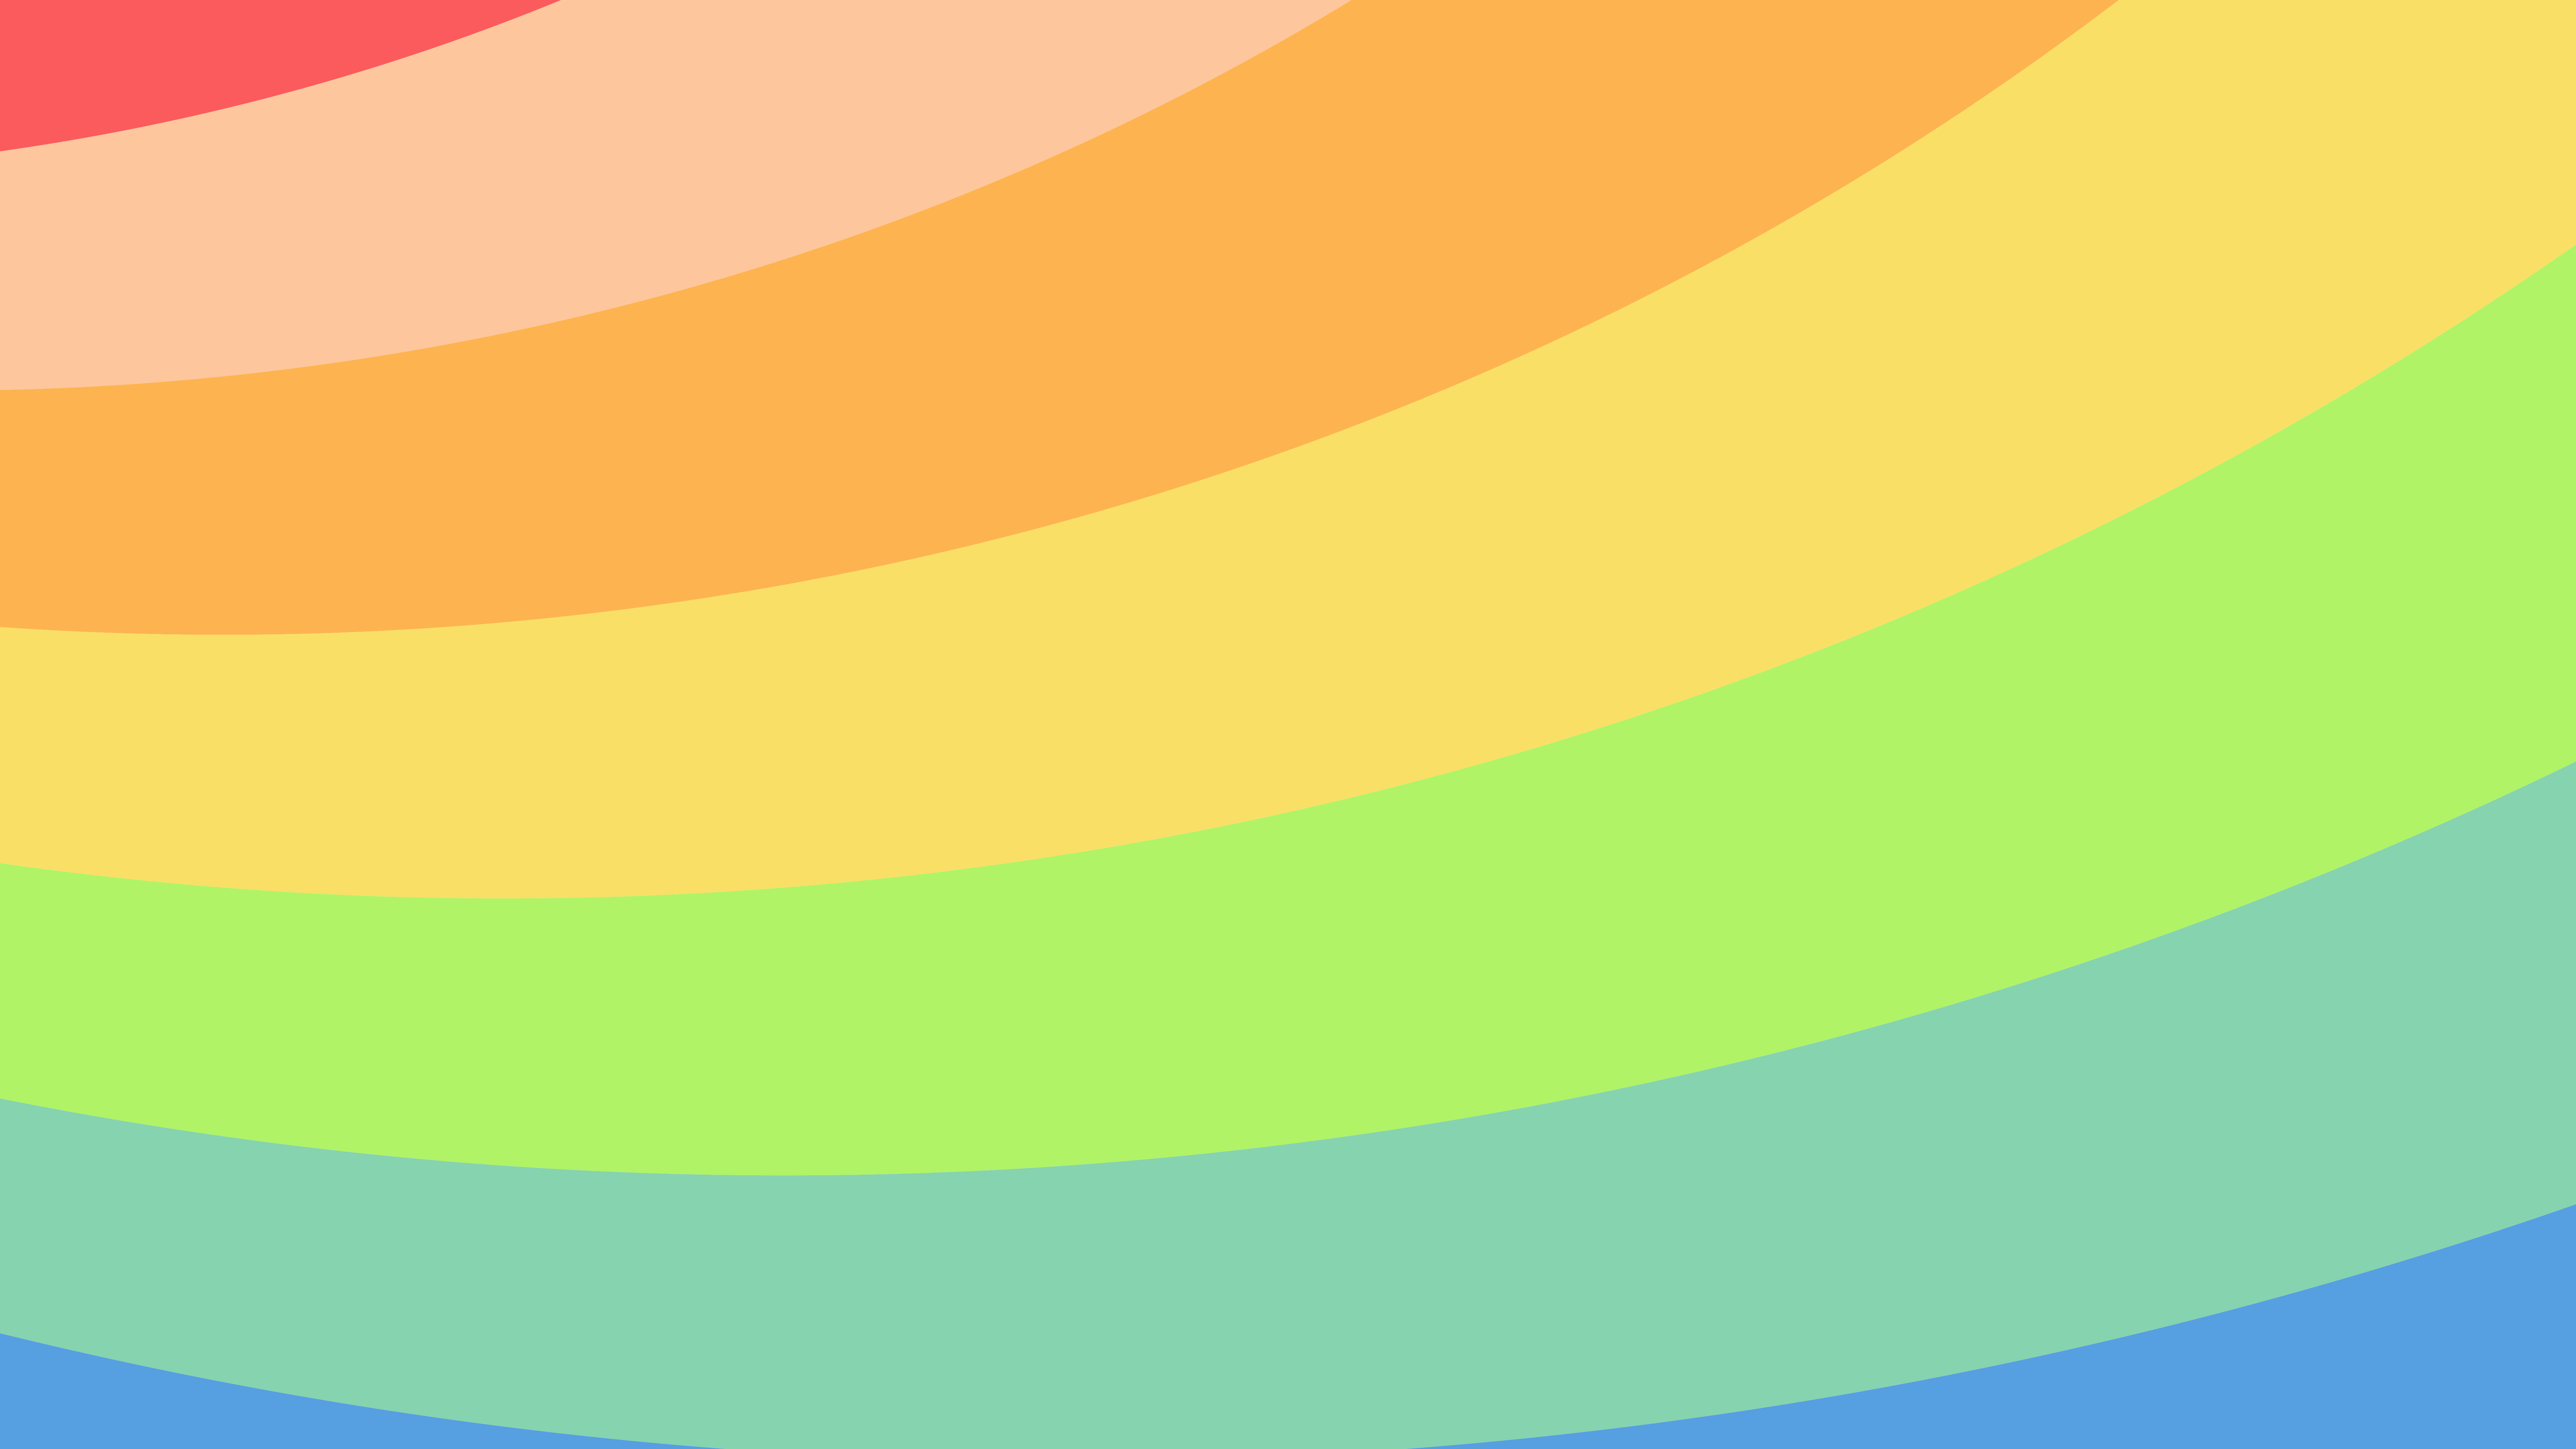 pastel rainbow stripes